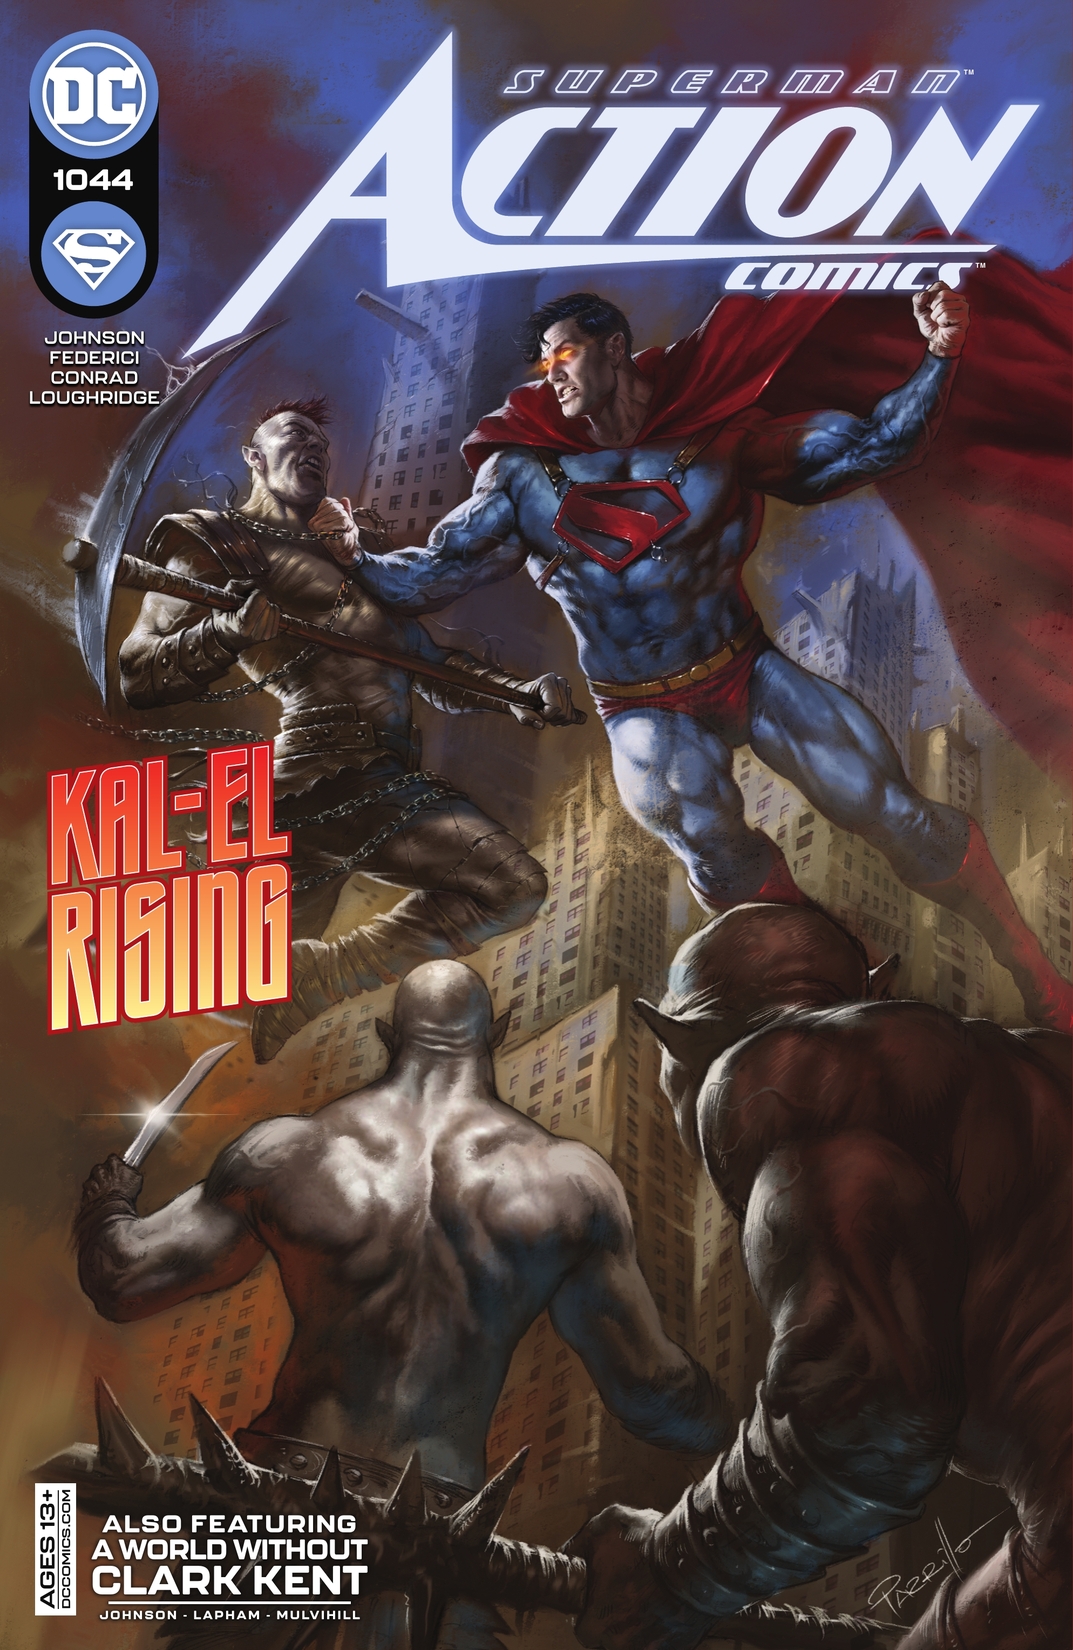 Action Comics (2016-) #1044 preview images